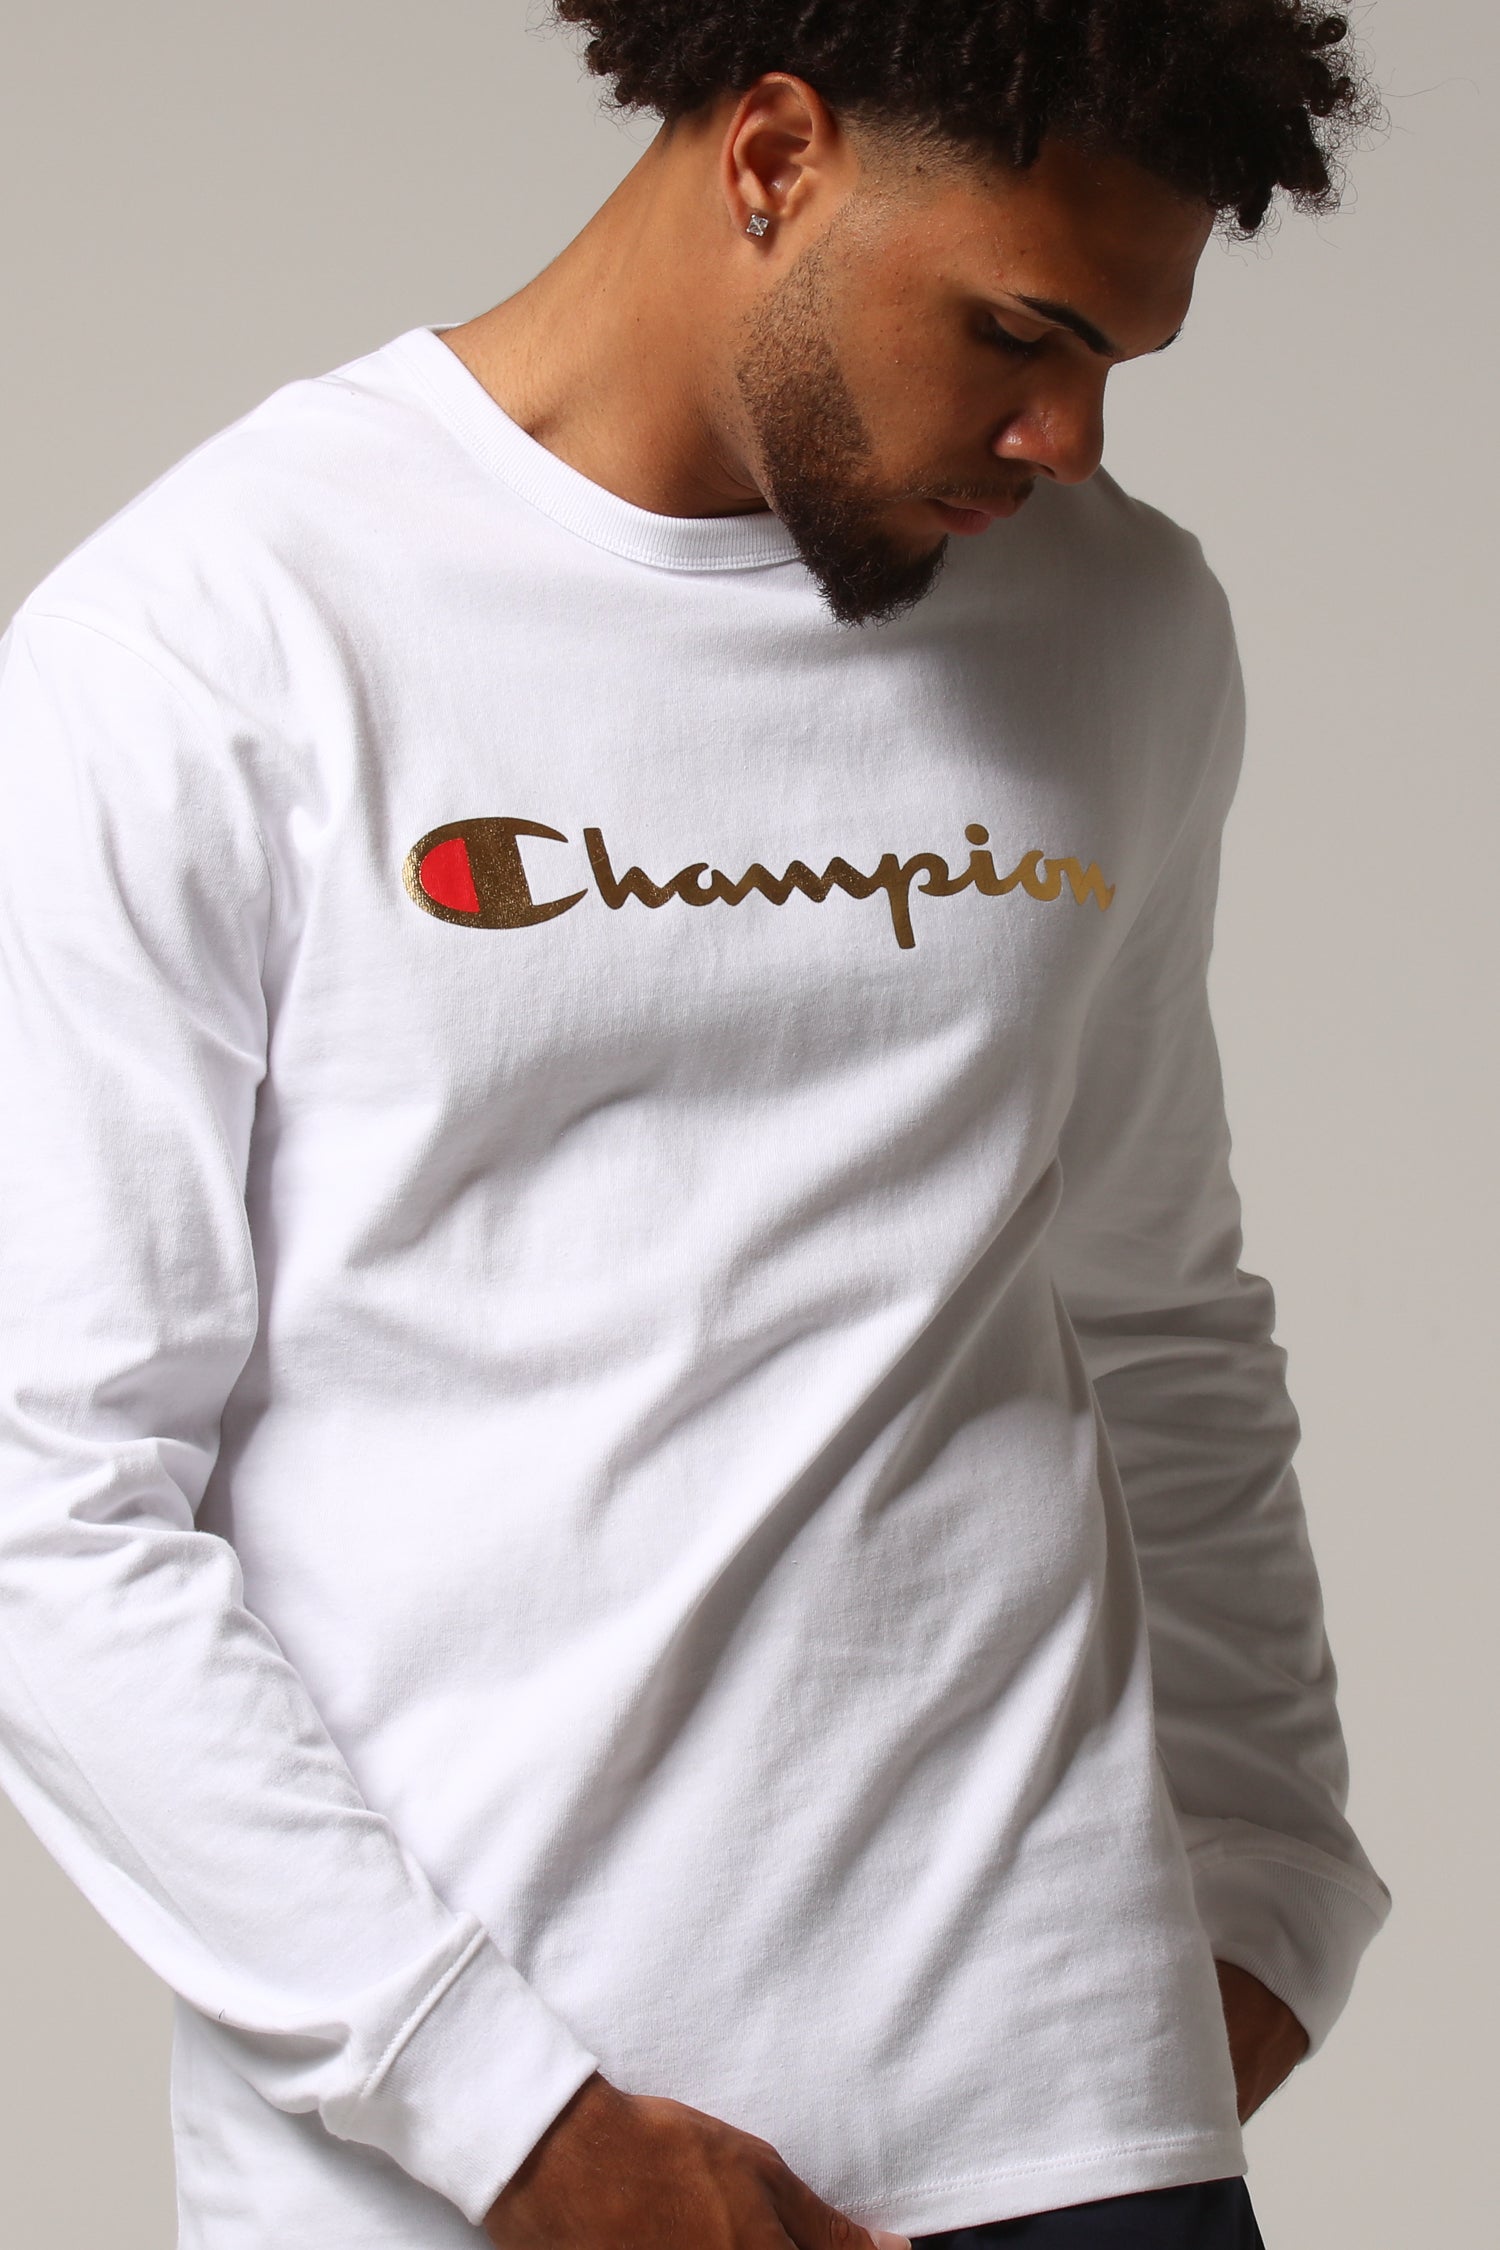 gold and white champion shirt